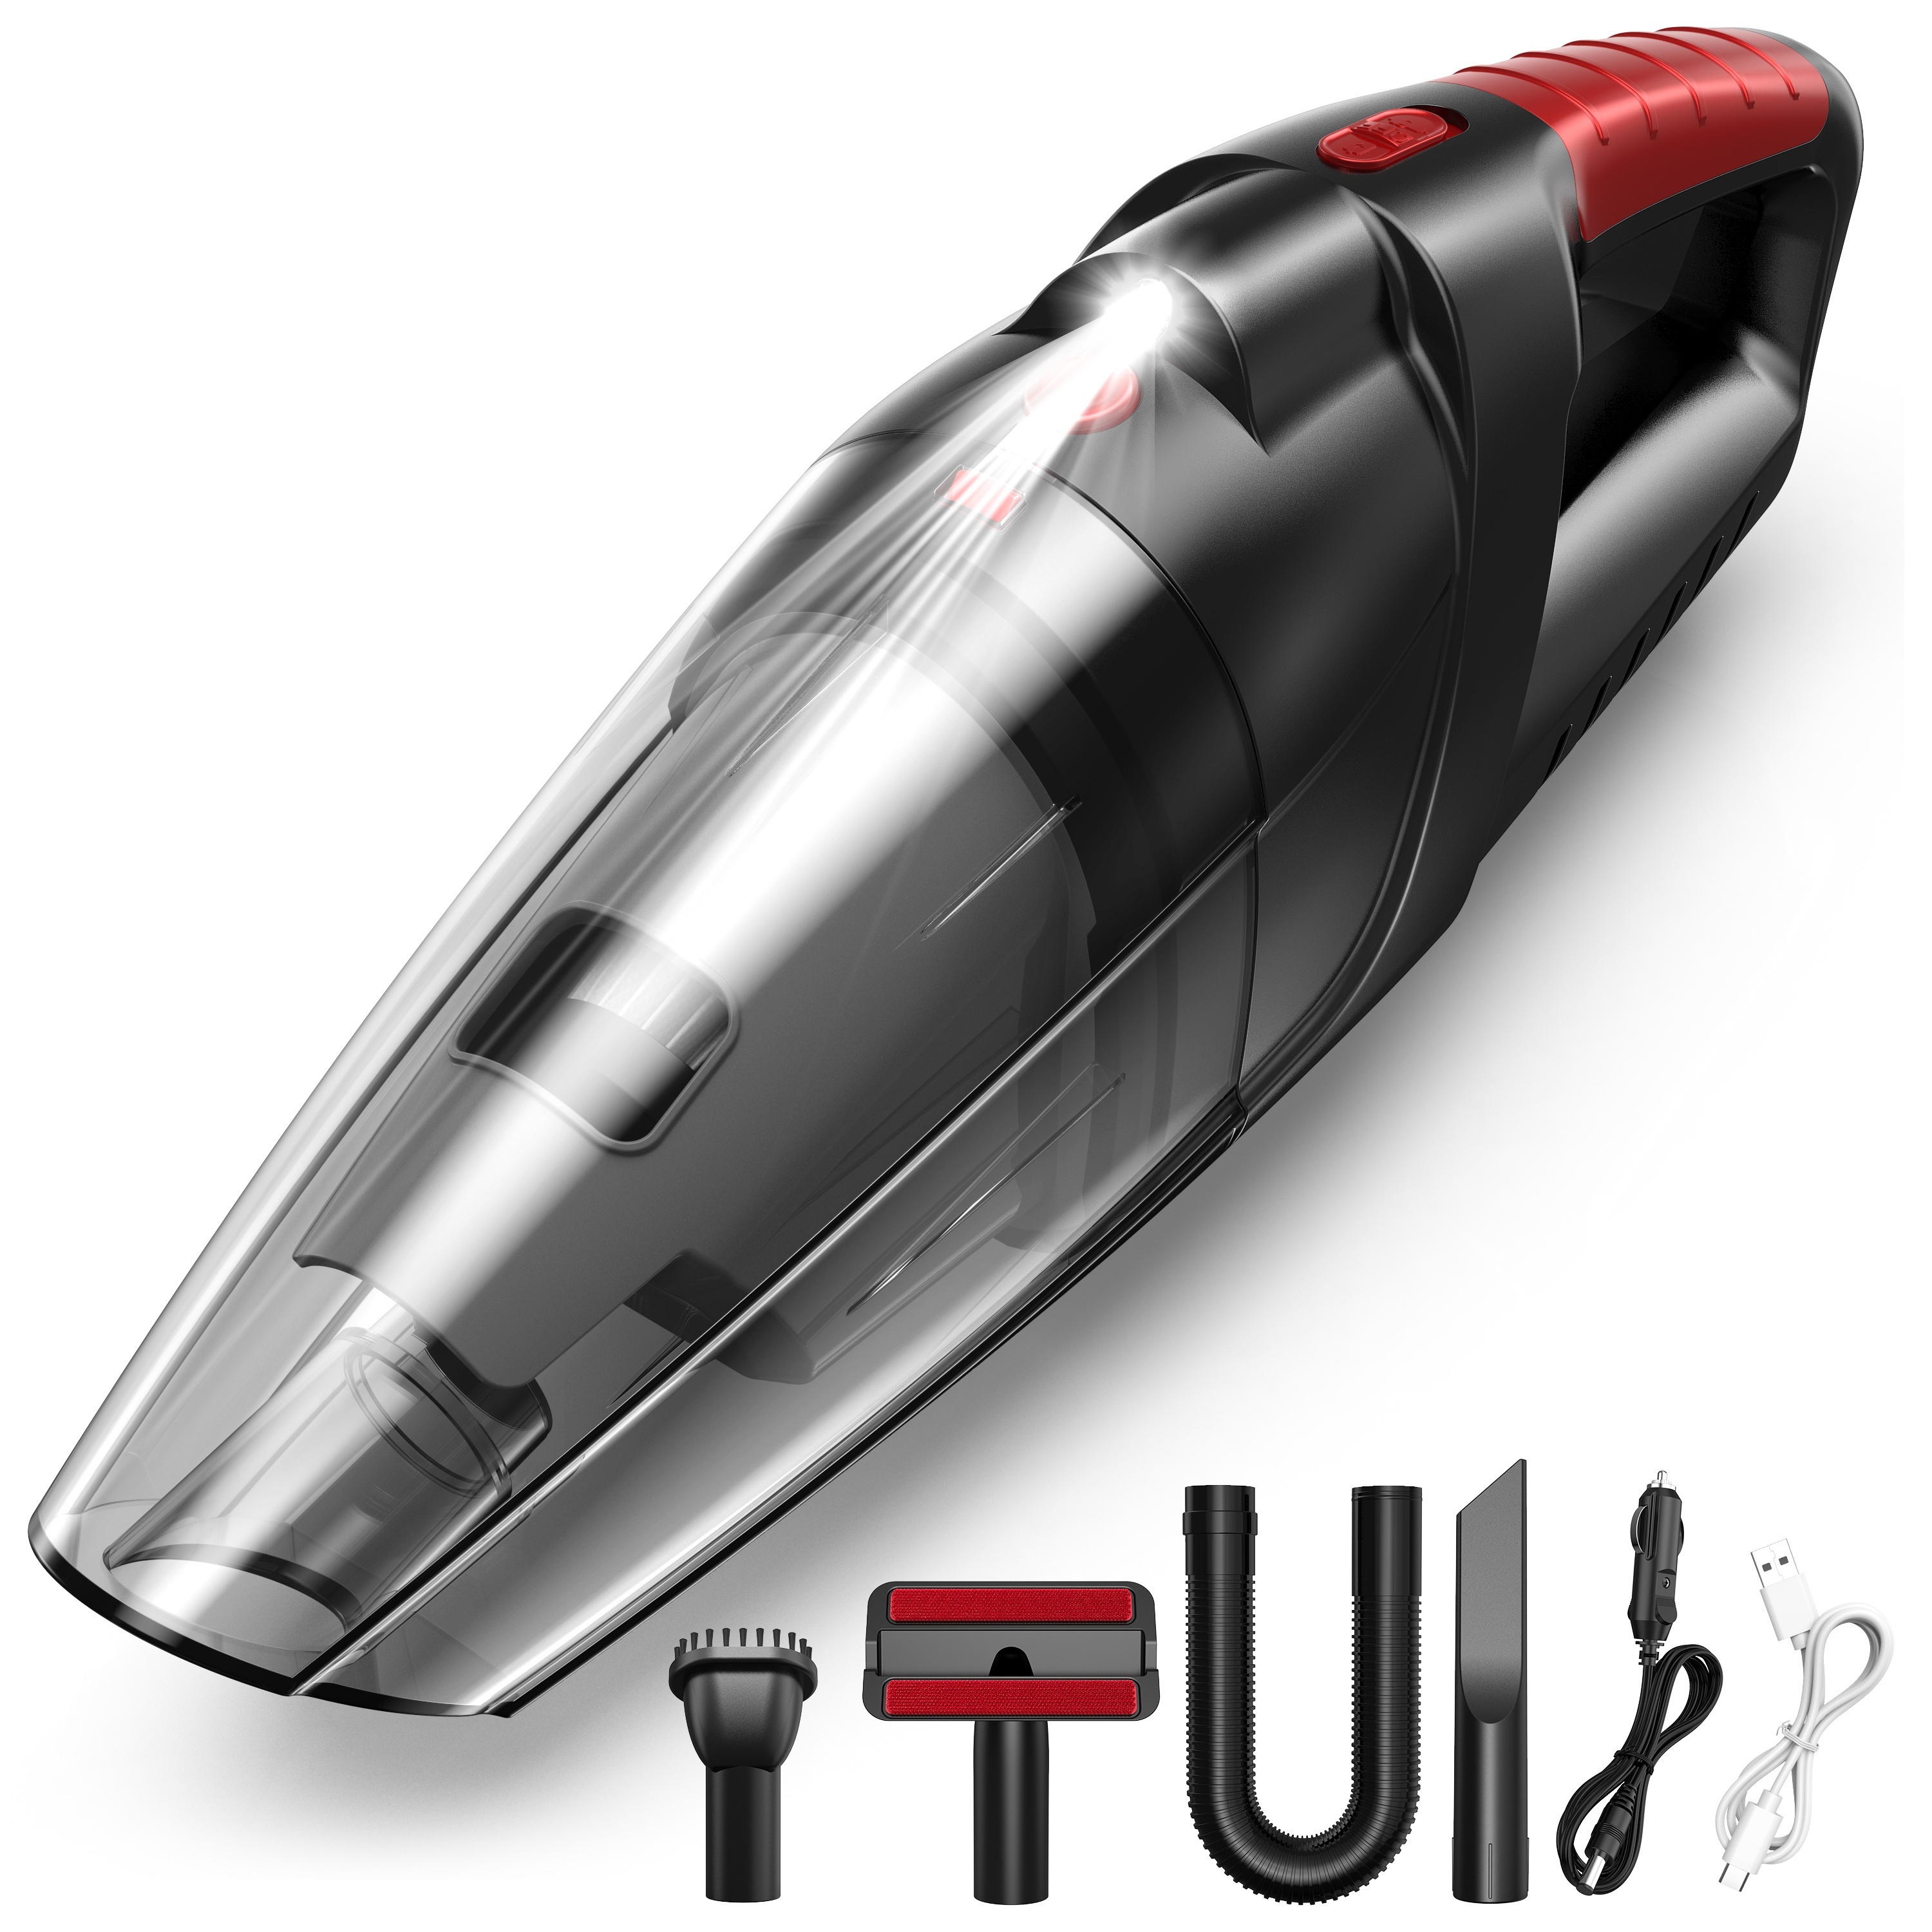 Cordless Push Rod Handheld Vacuum Cleaner High power Silent - Temu